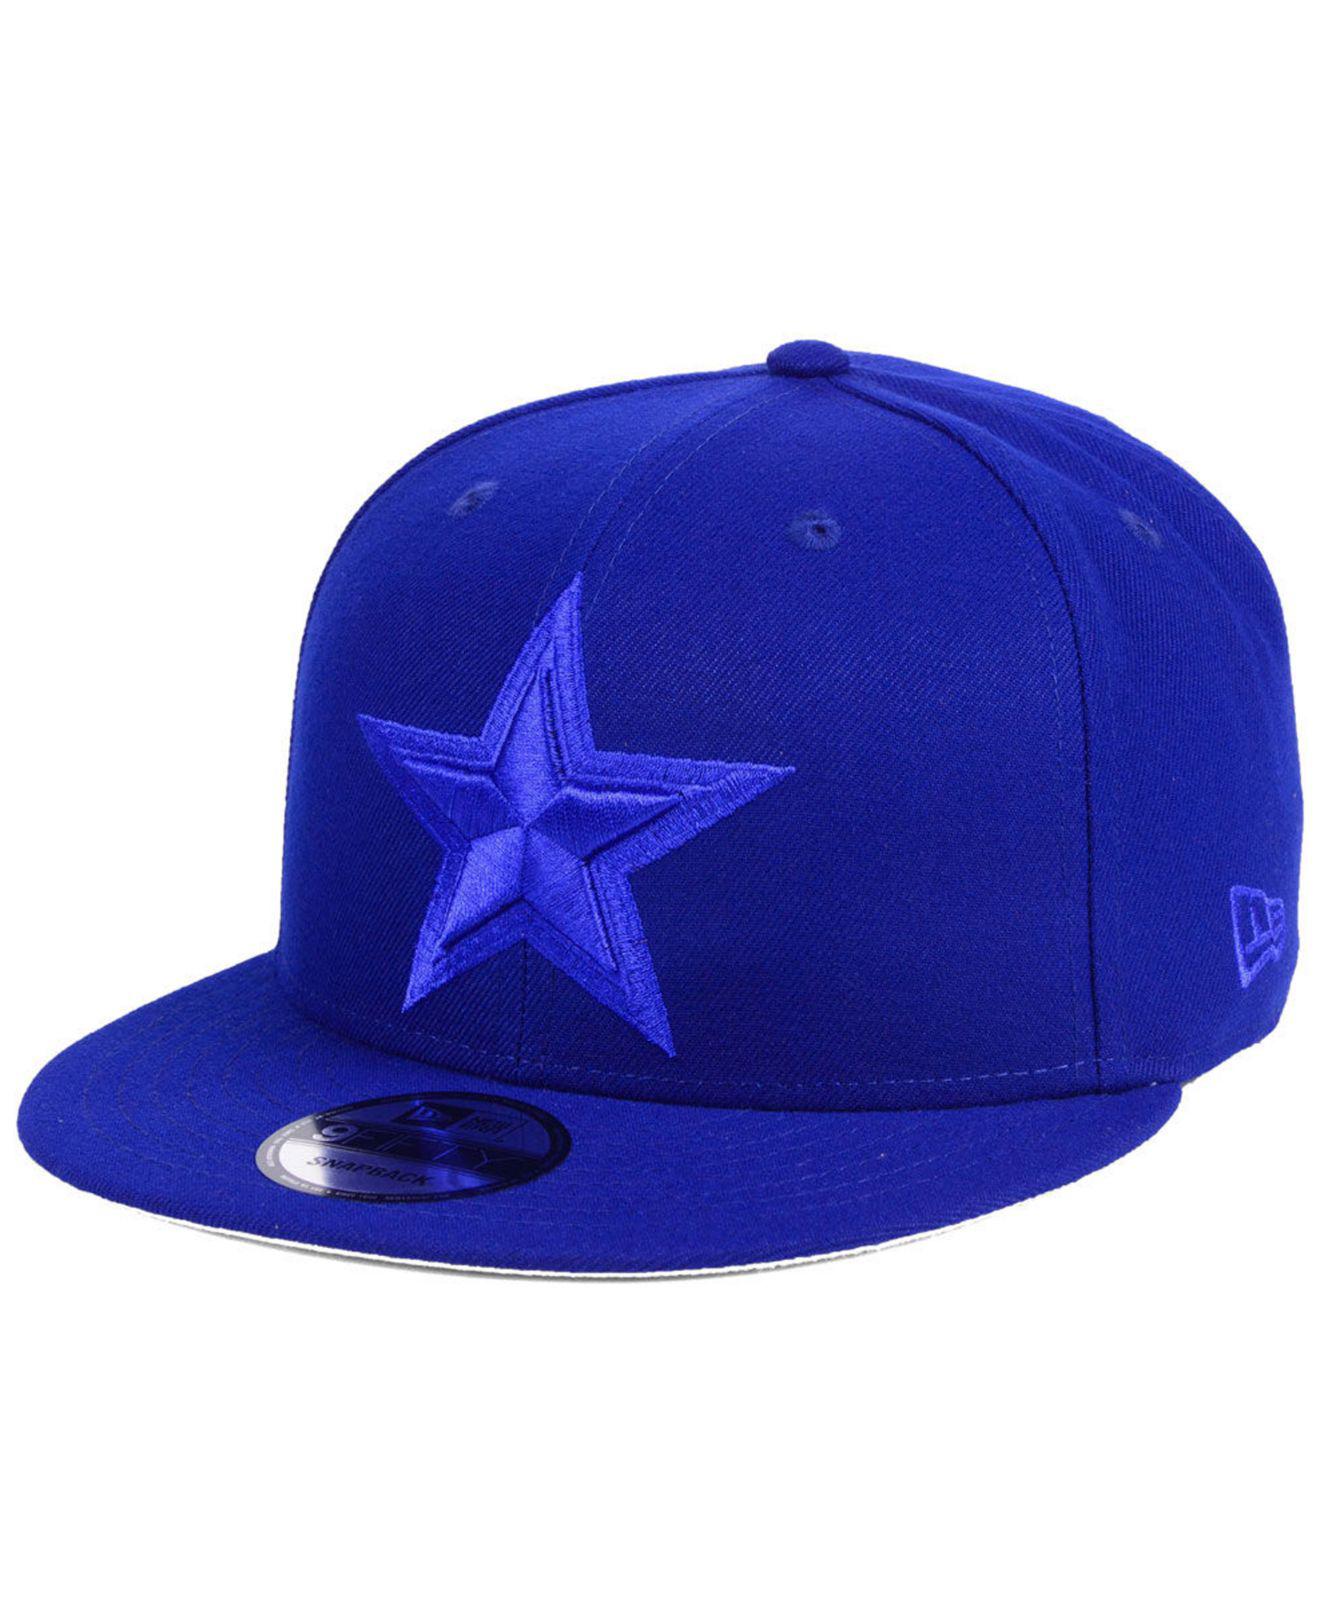 Lids Dallas Cowboys Pro Standard 2Tone Snapback Hat - Gray/Navy